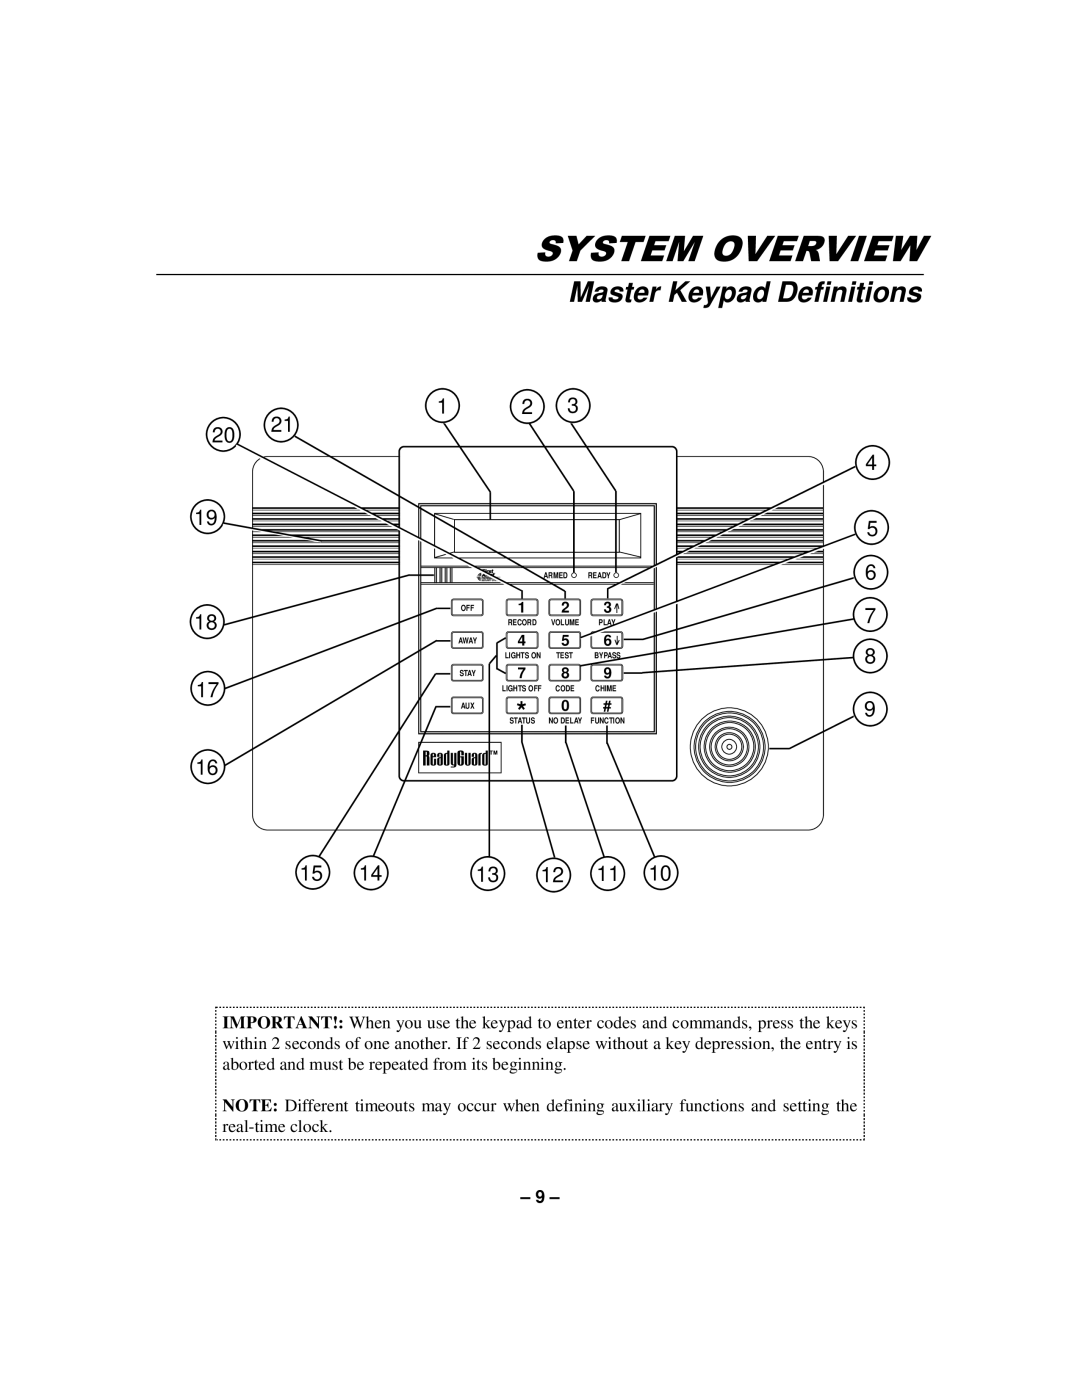 First Alert N8891-1 manual 2021, Master Keypad Definitions 